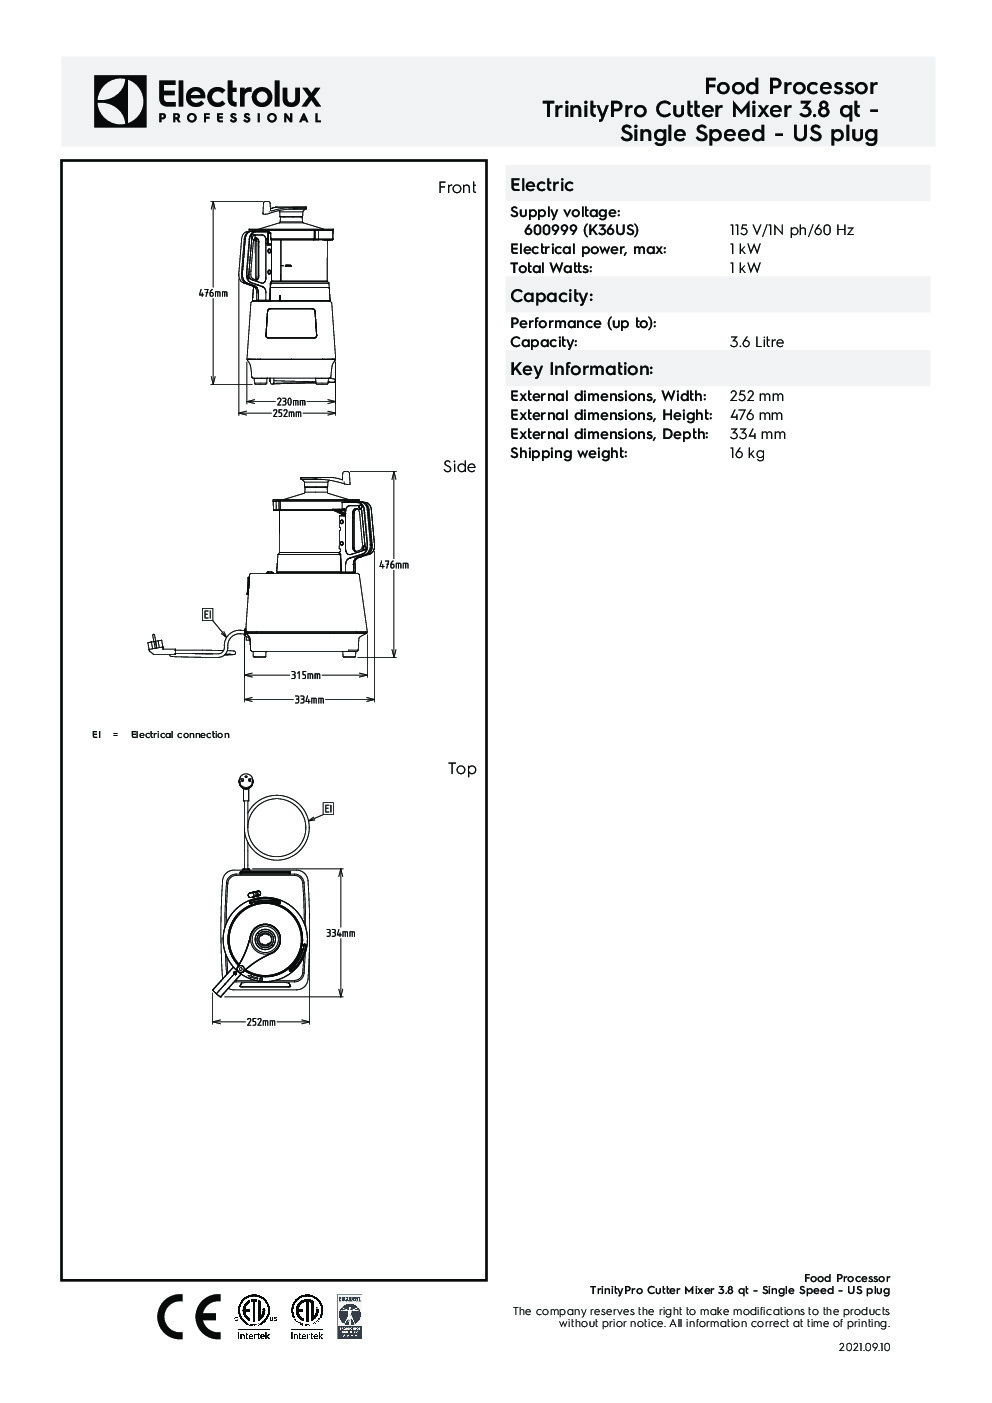 Electrolux Professional 600999 Vertical Cutter VCM Mixer